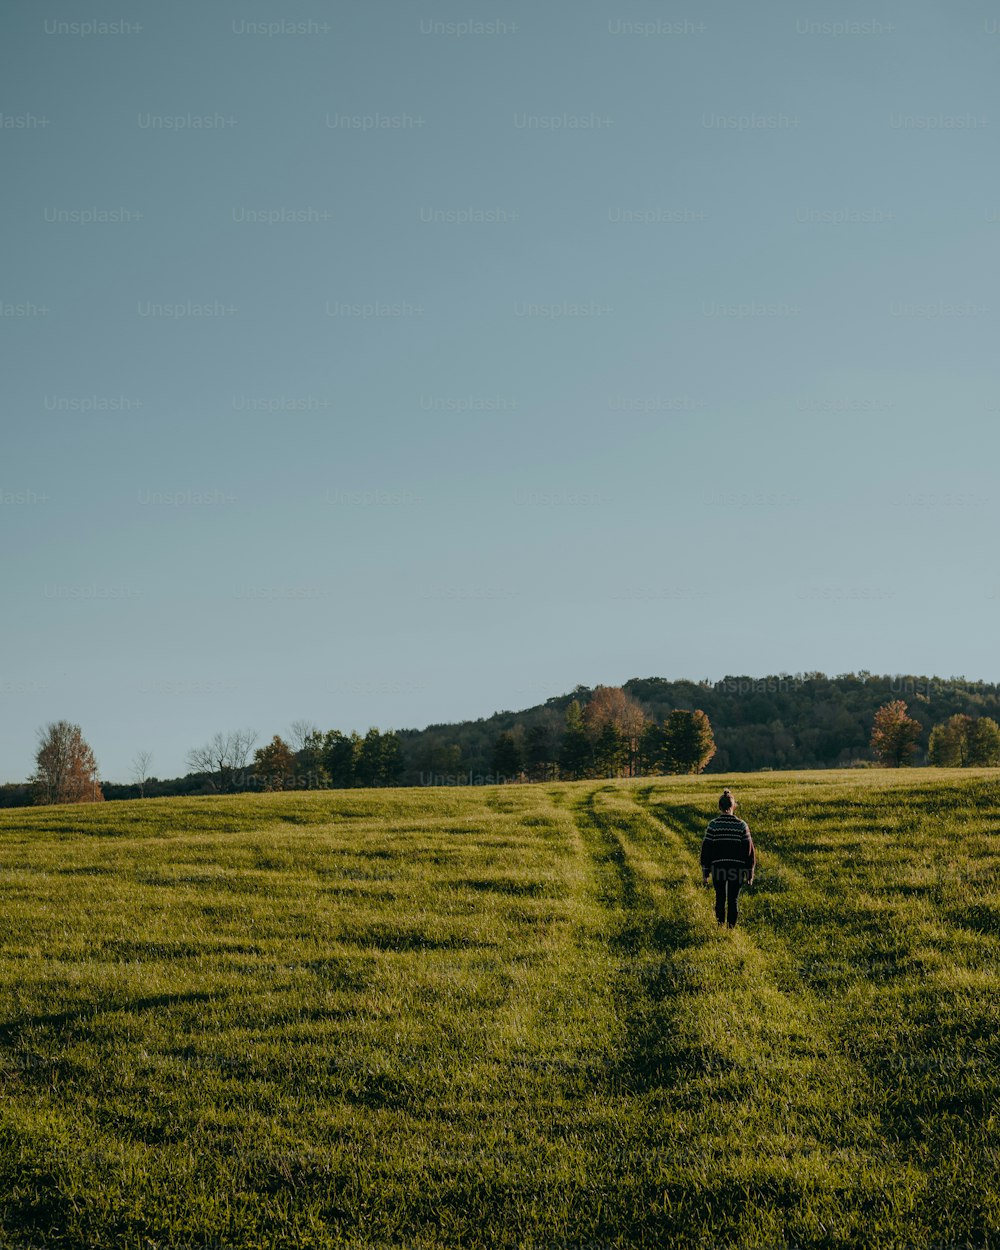 a person walking across a lush green field